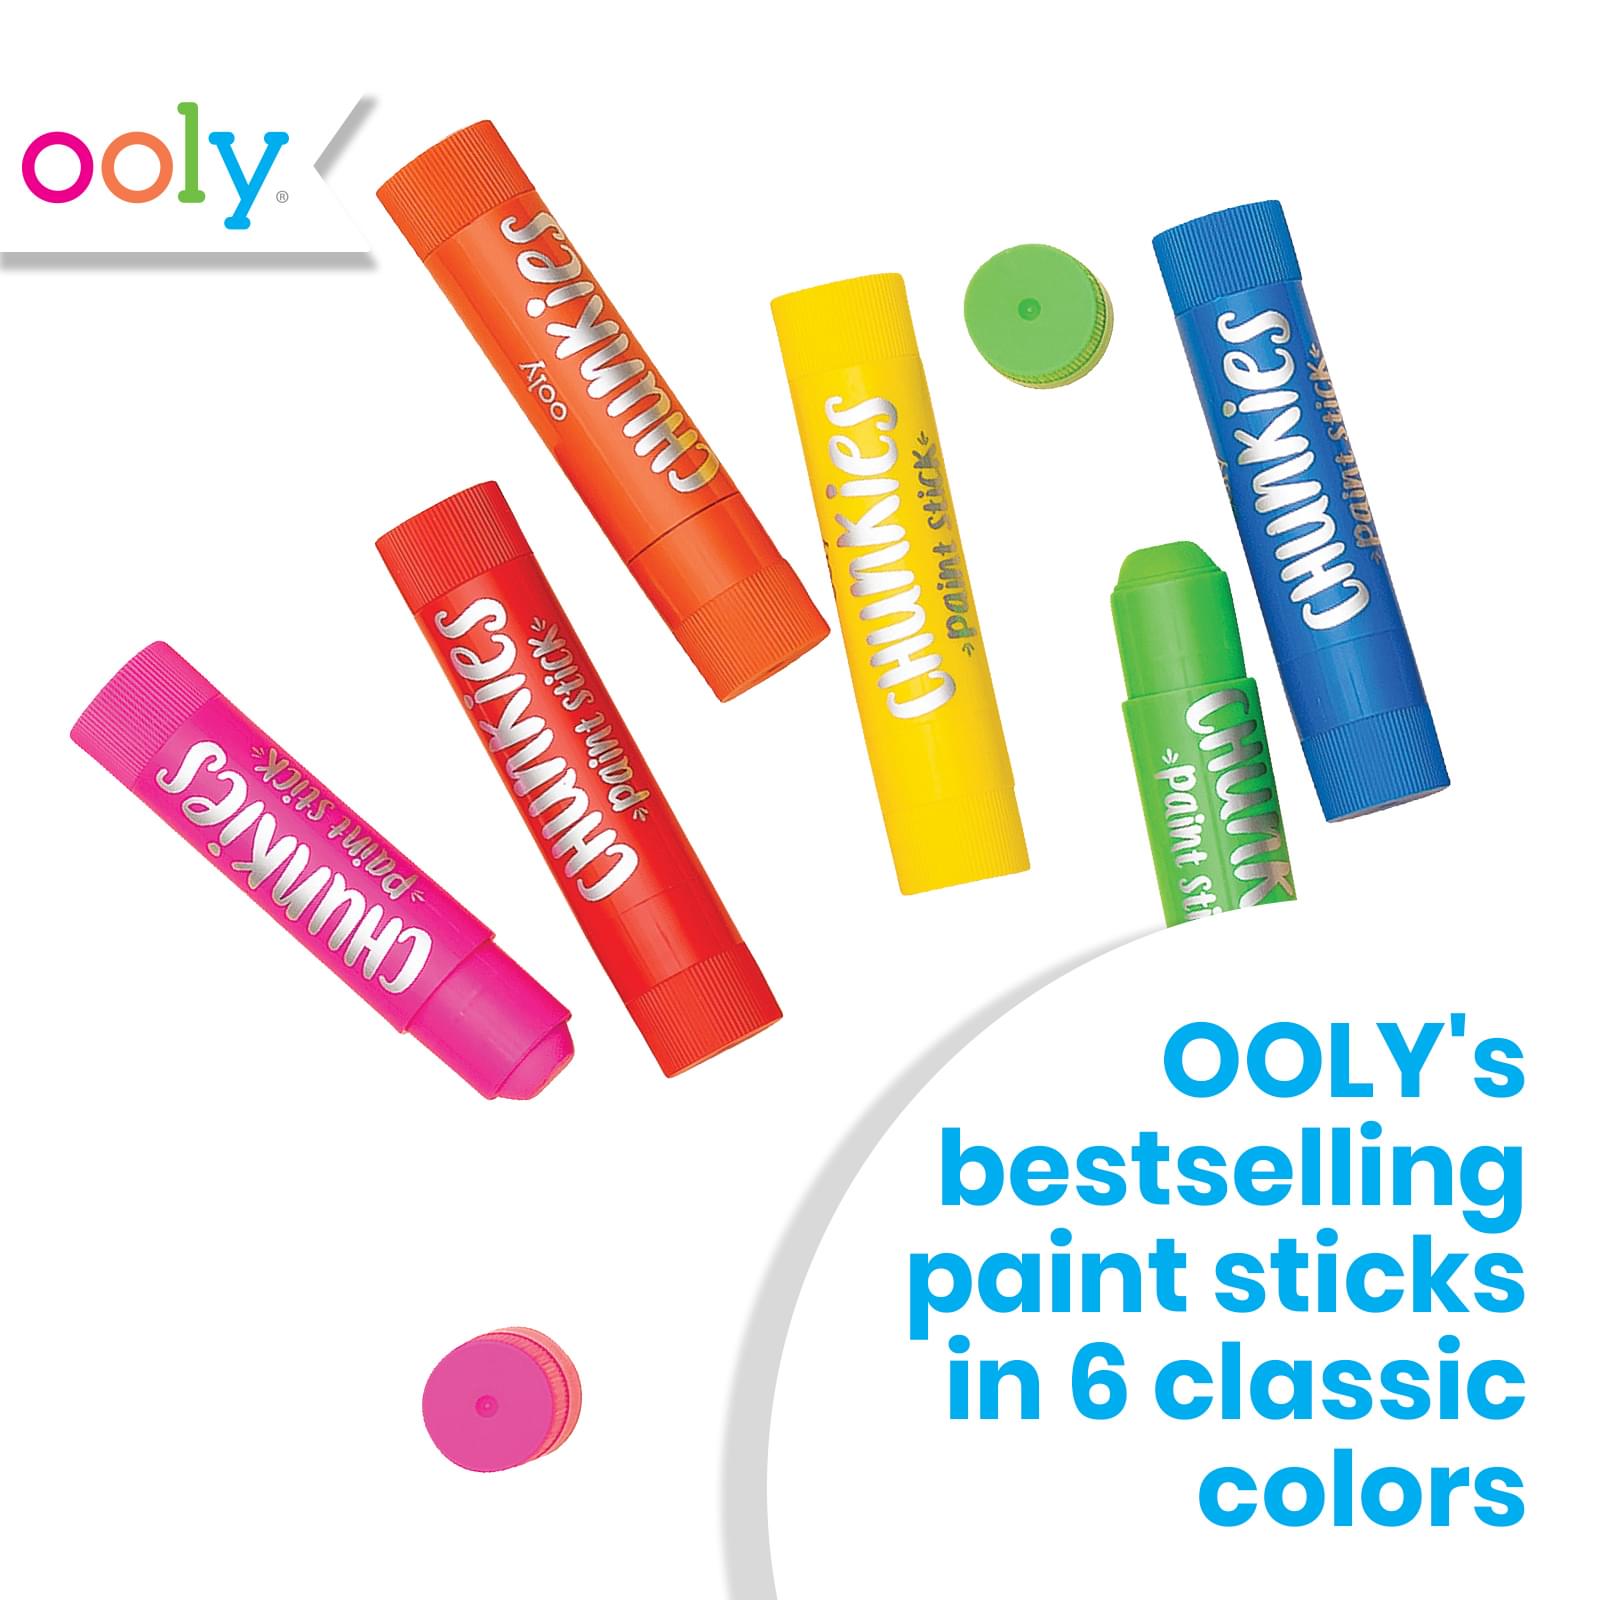 Chunkies Paint Sticks Metallic - Set of 6 — MoJoy Studio